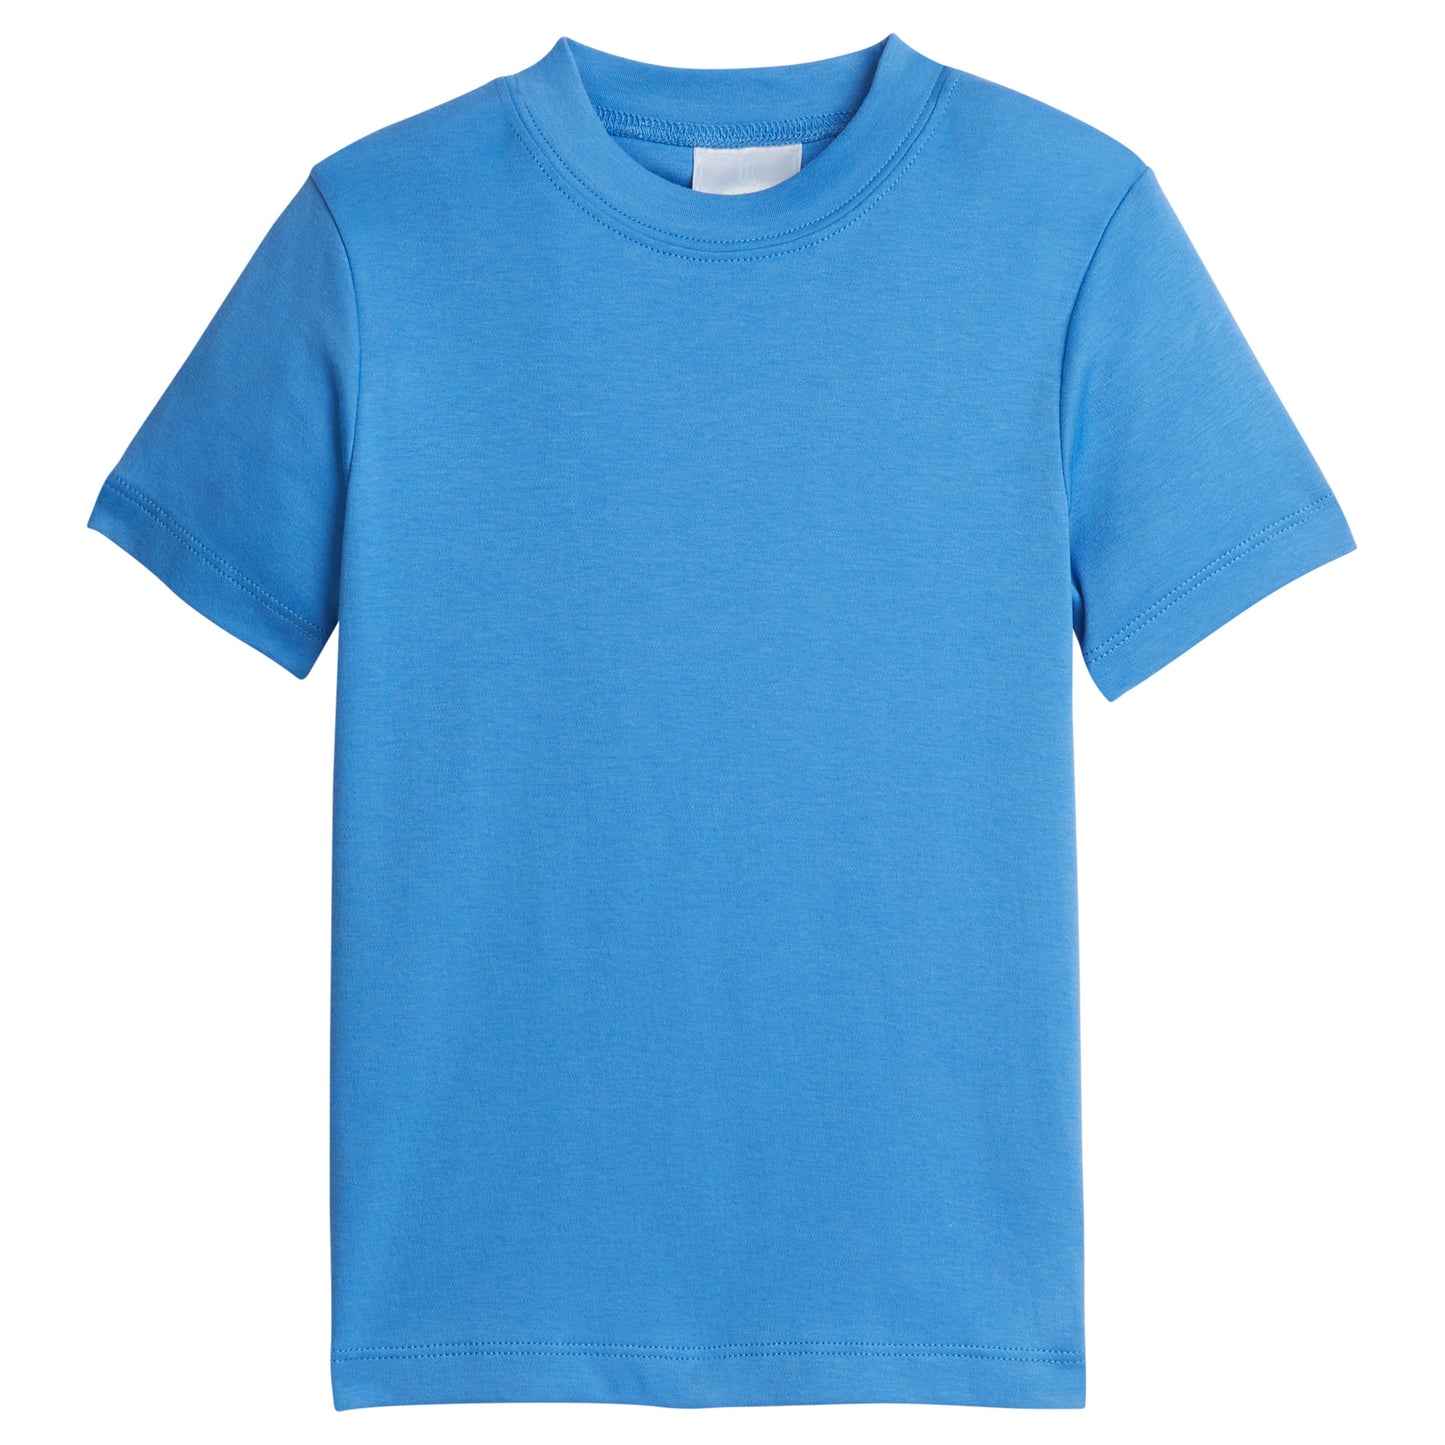 Little English Classic Kids Tee Shirt - Regatta Blue